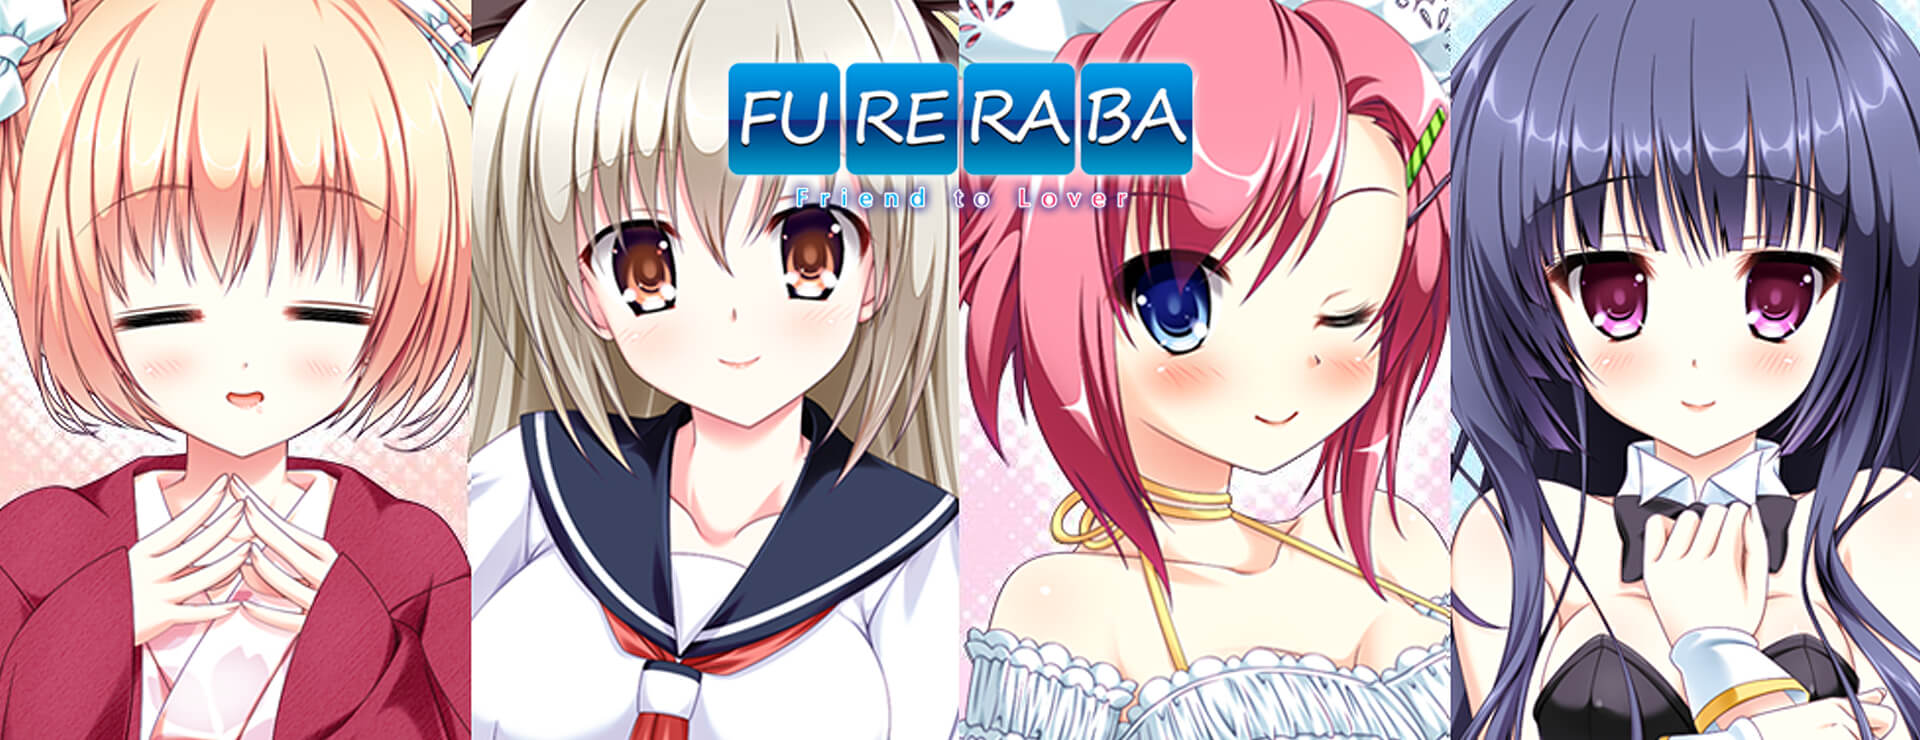 Fureraba: After Stories DLC - Novela Visual Juego